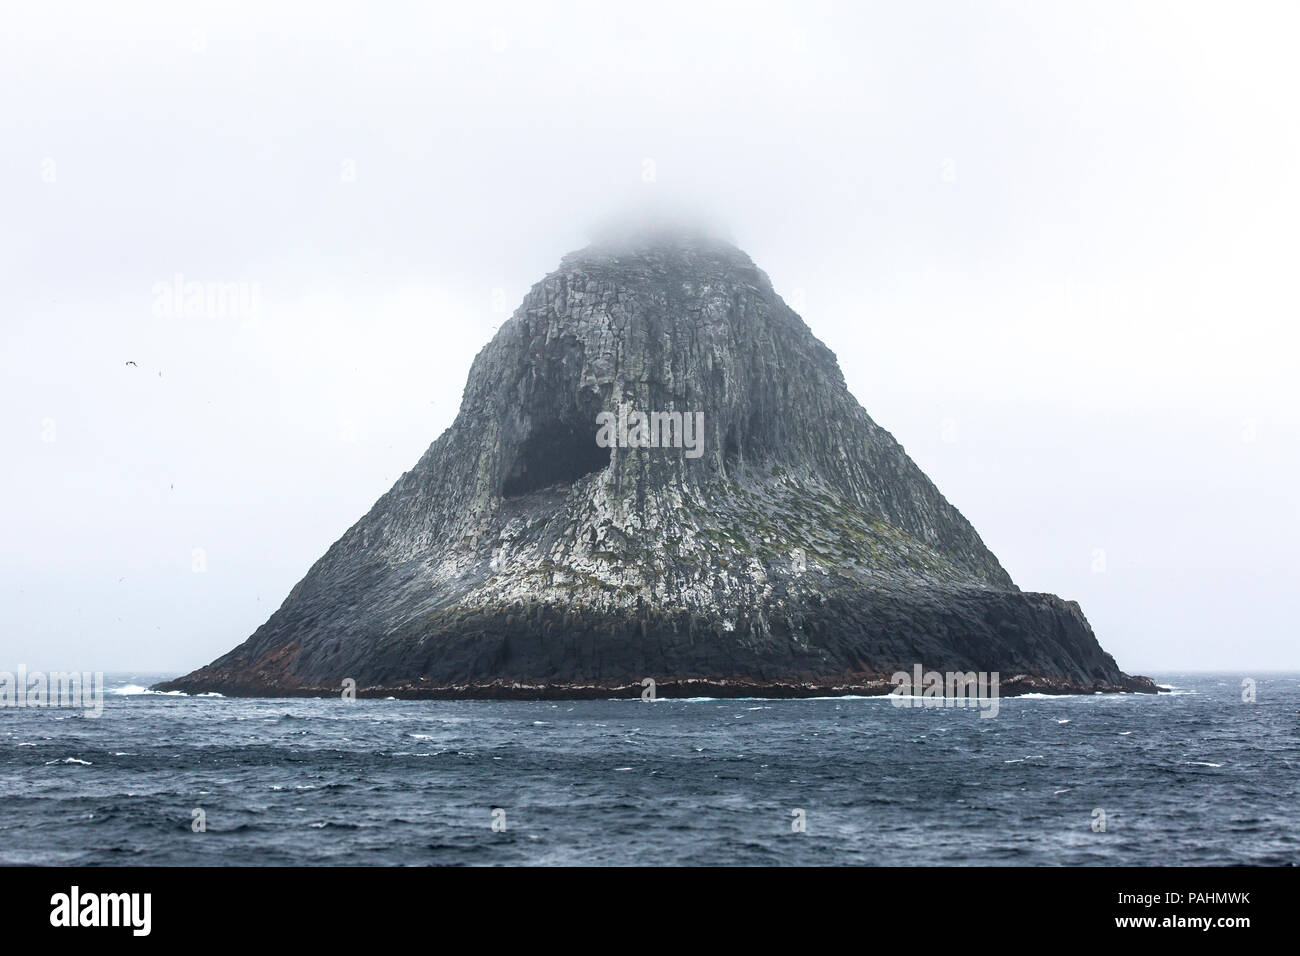 The Pyramid, Chatham Islands, New Zealand Stock Photo